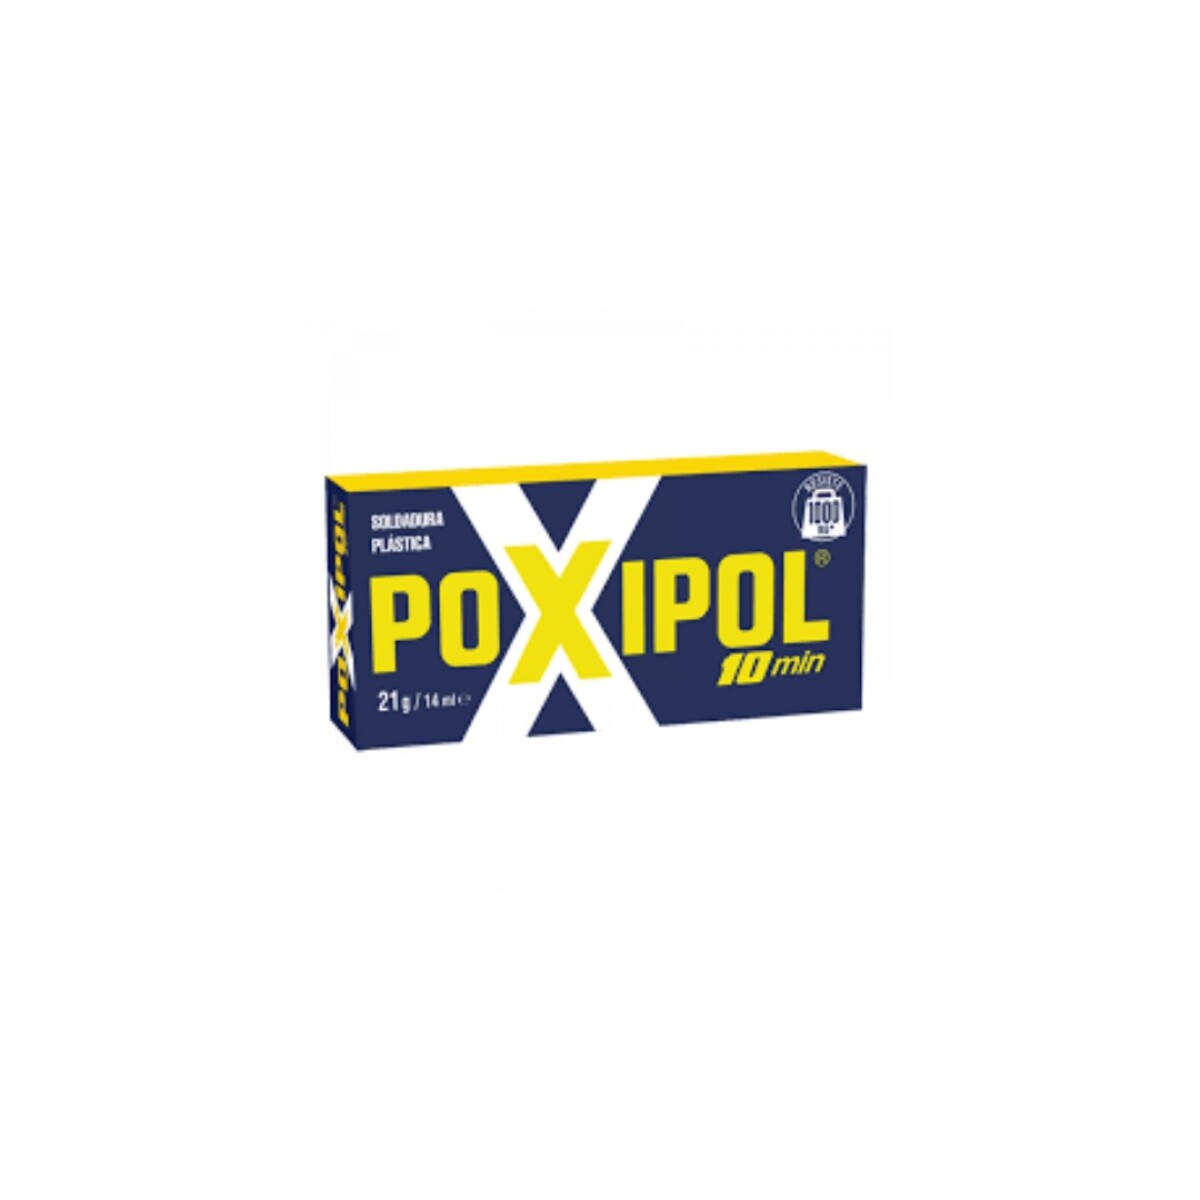 POXIPOL 10 MIN 21G - Sin color 